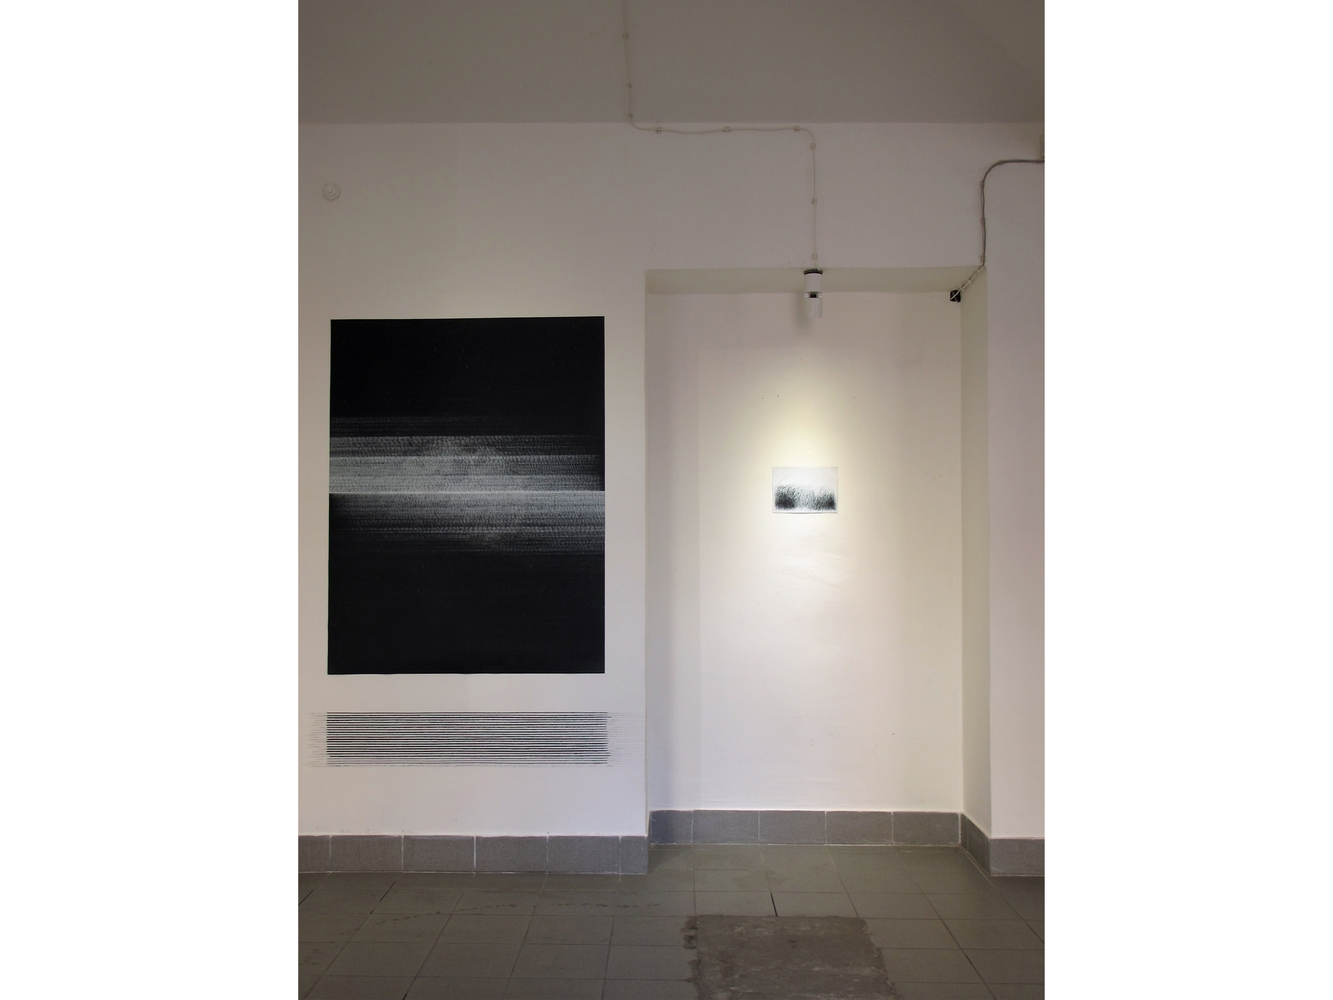 Moon Is Broken, Jedna Dva Tři Gallery, Prague, may 2017